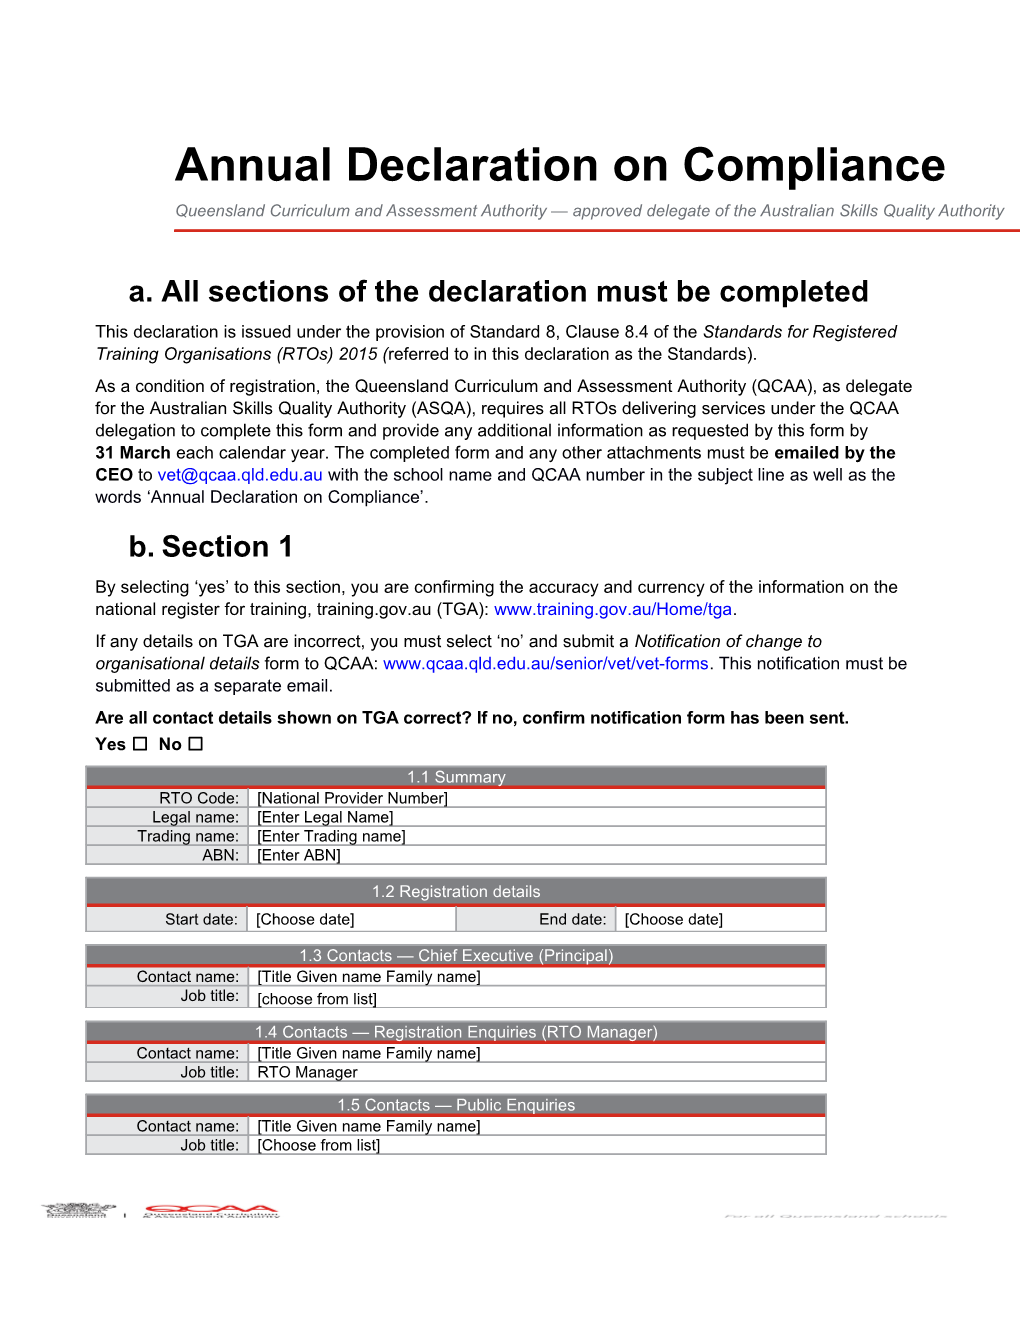 VET: Annual Declaration on Compliance